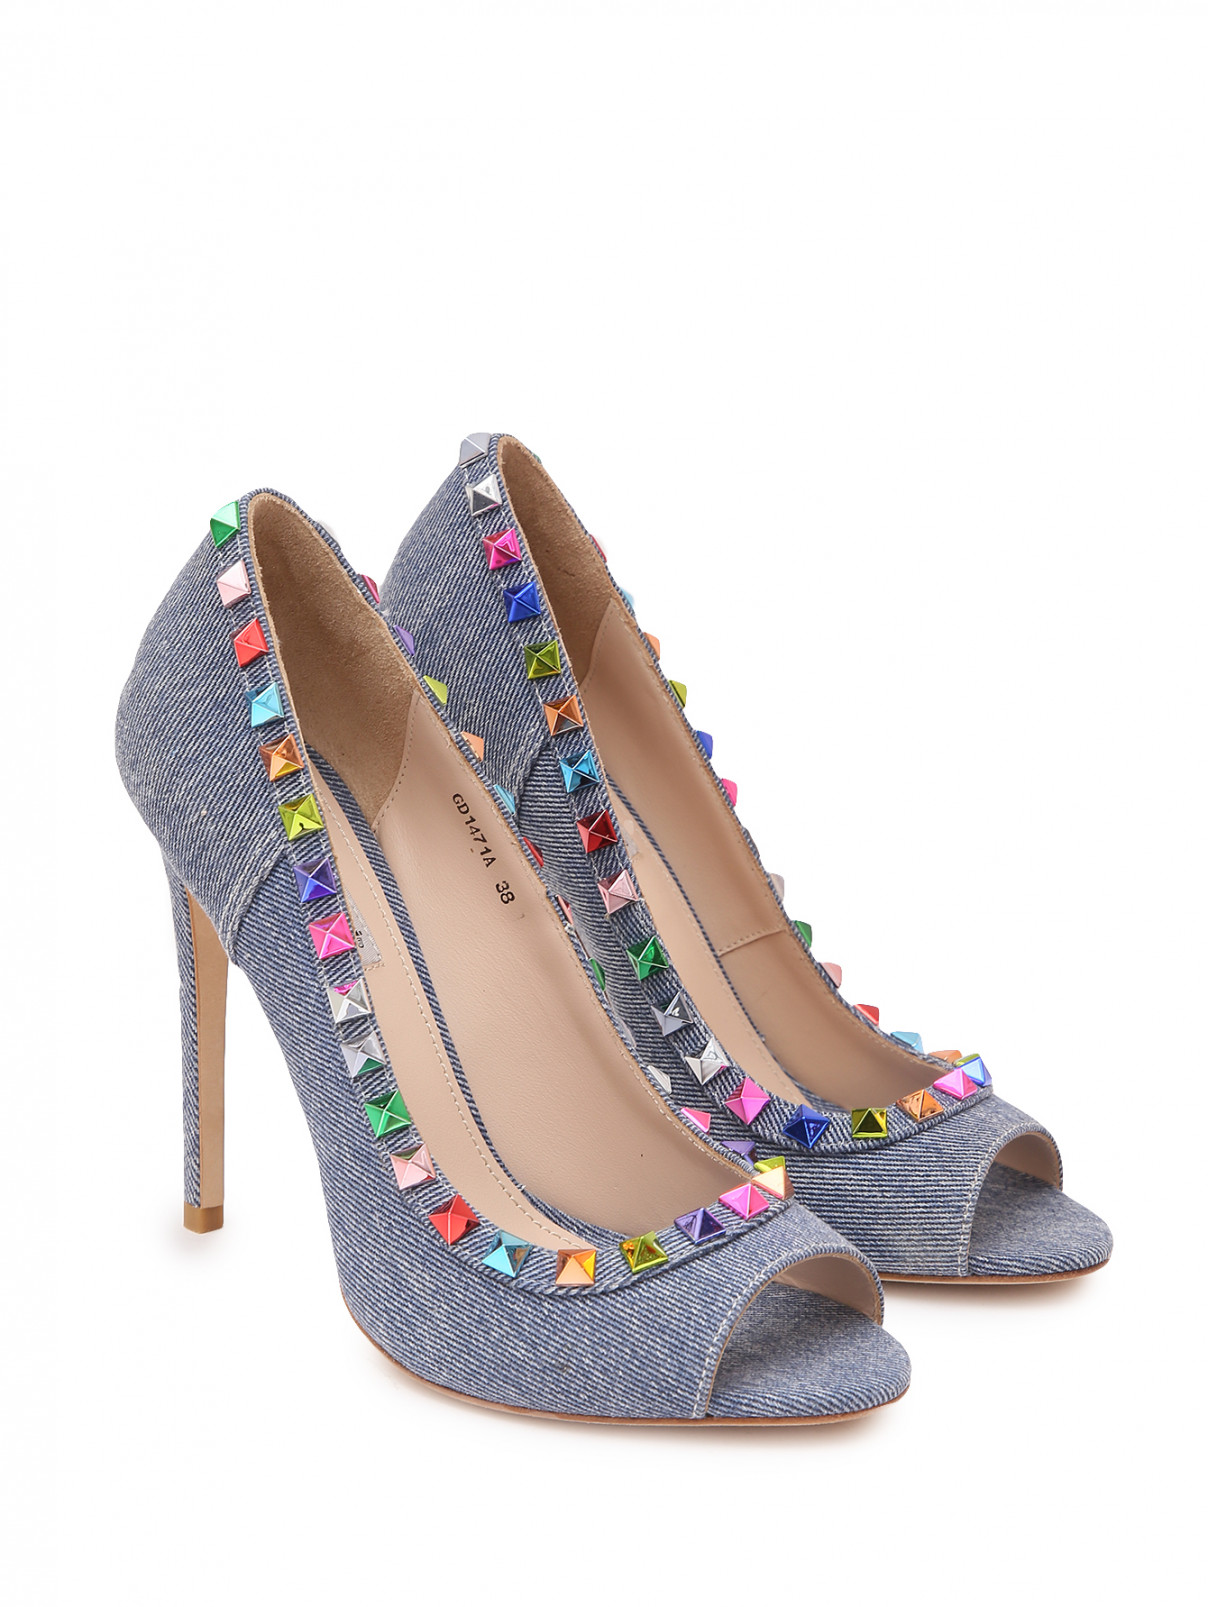 Туфли из денима с шипами Gianni Renzi Couture  –  Общий вид  – Цвет:  Синий